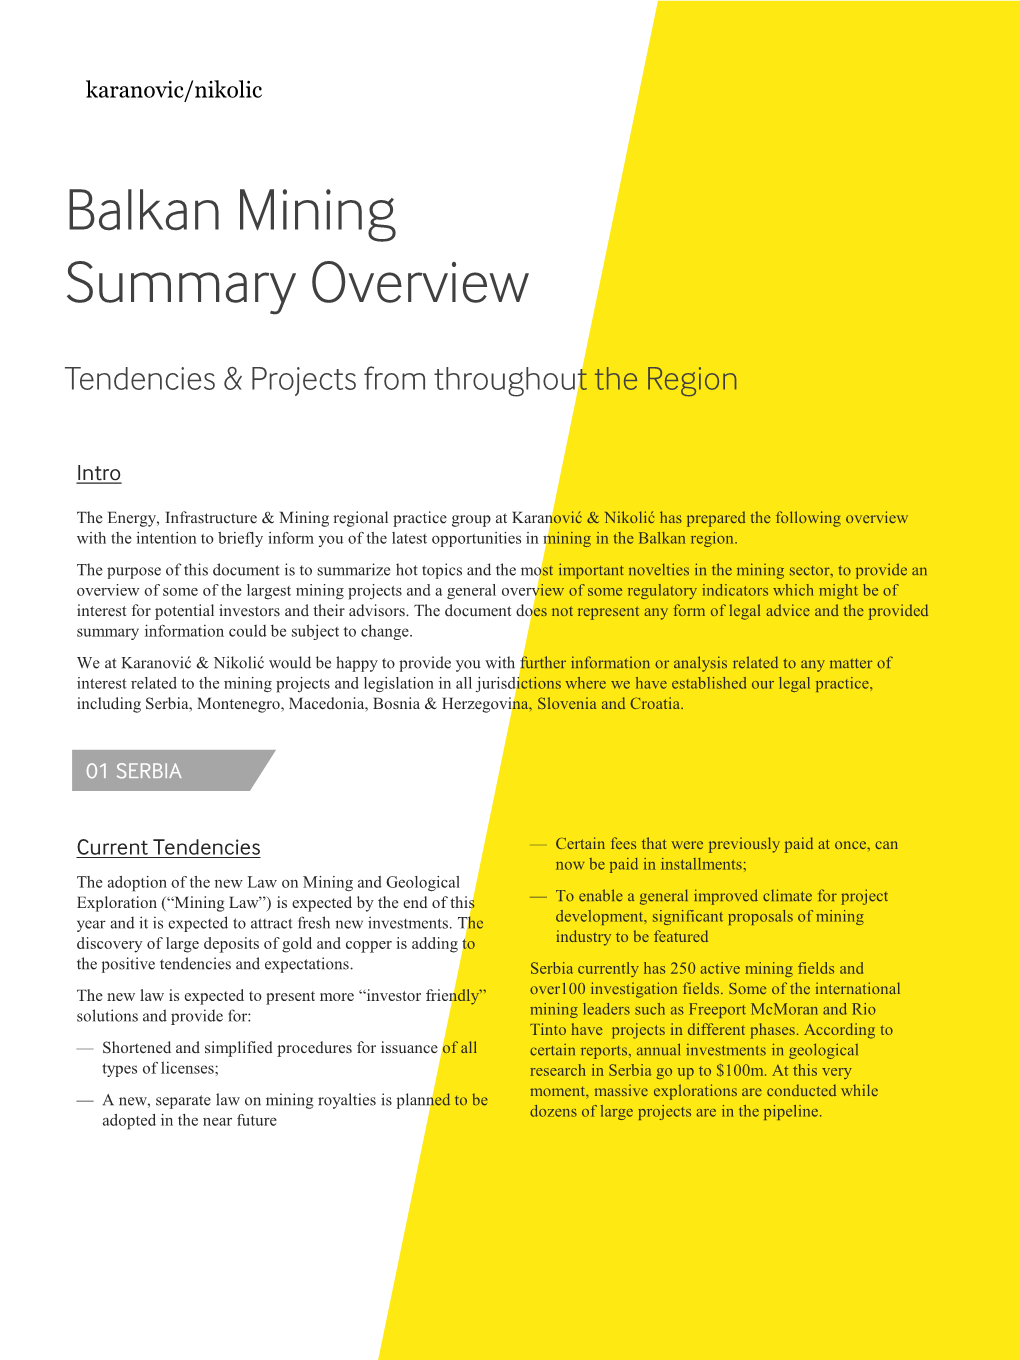 Balkan Mining Summary Overview